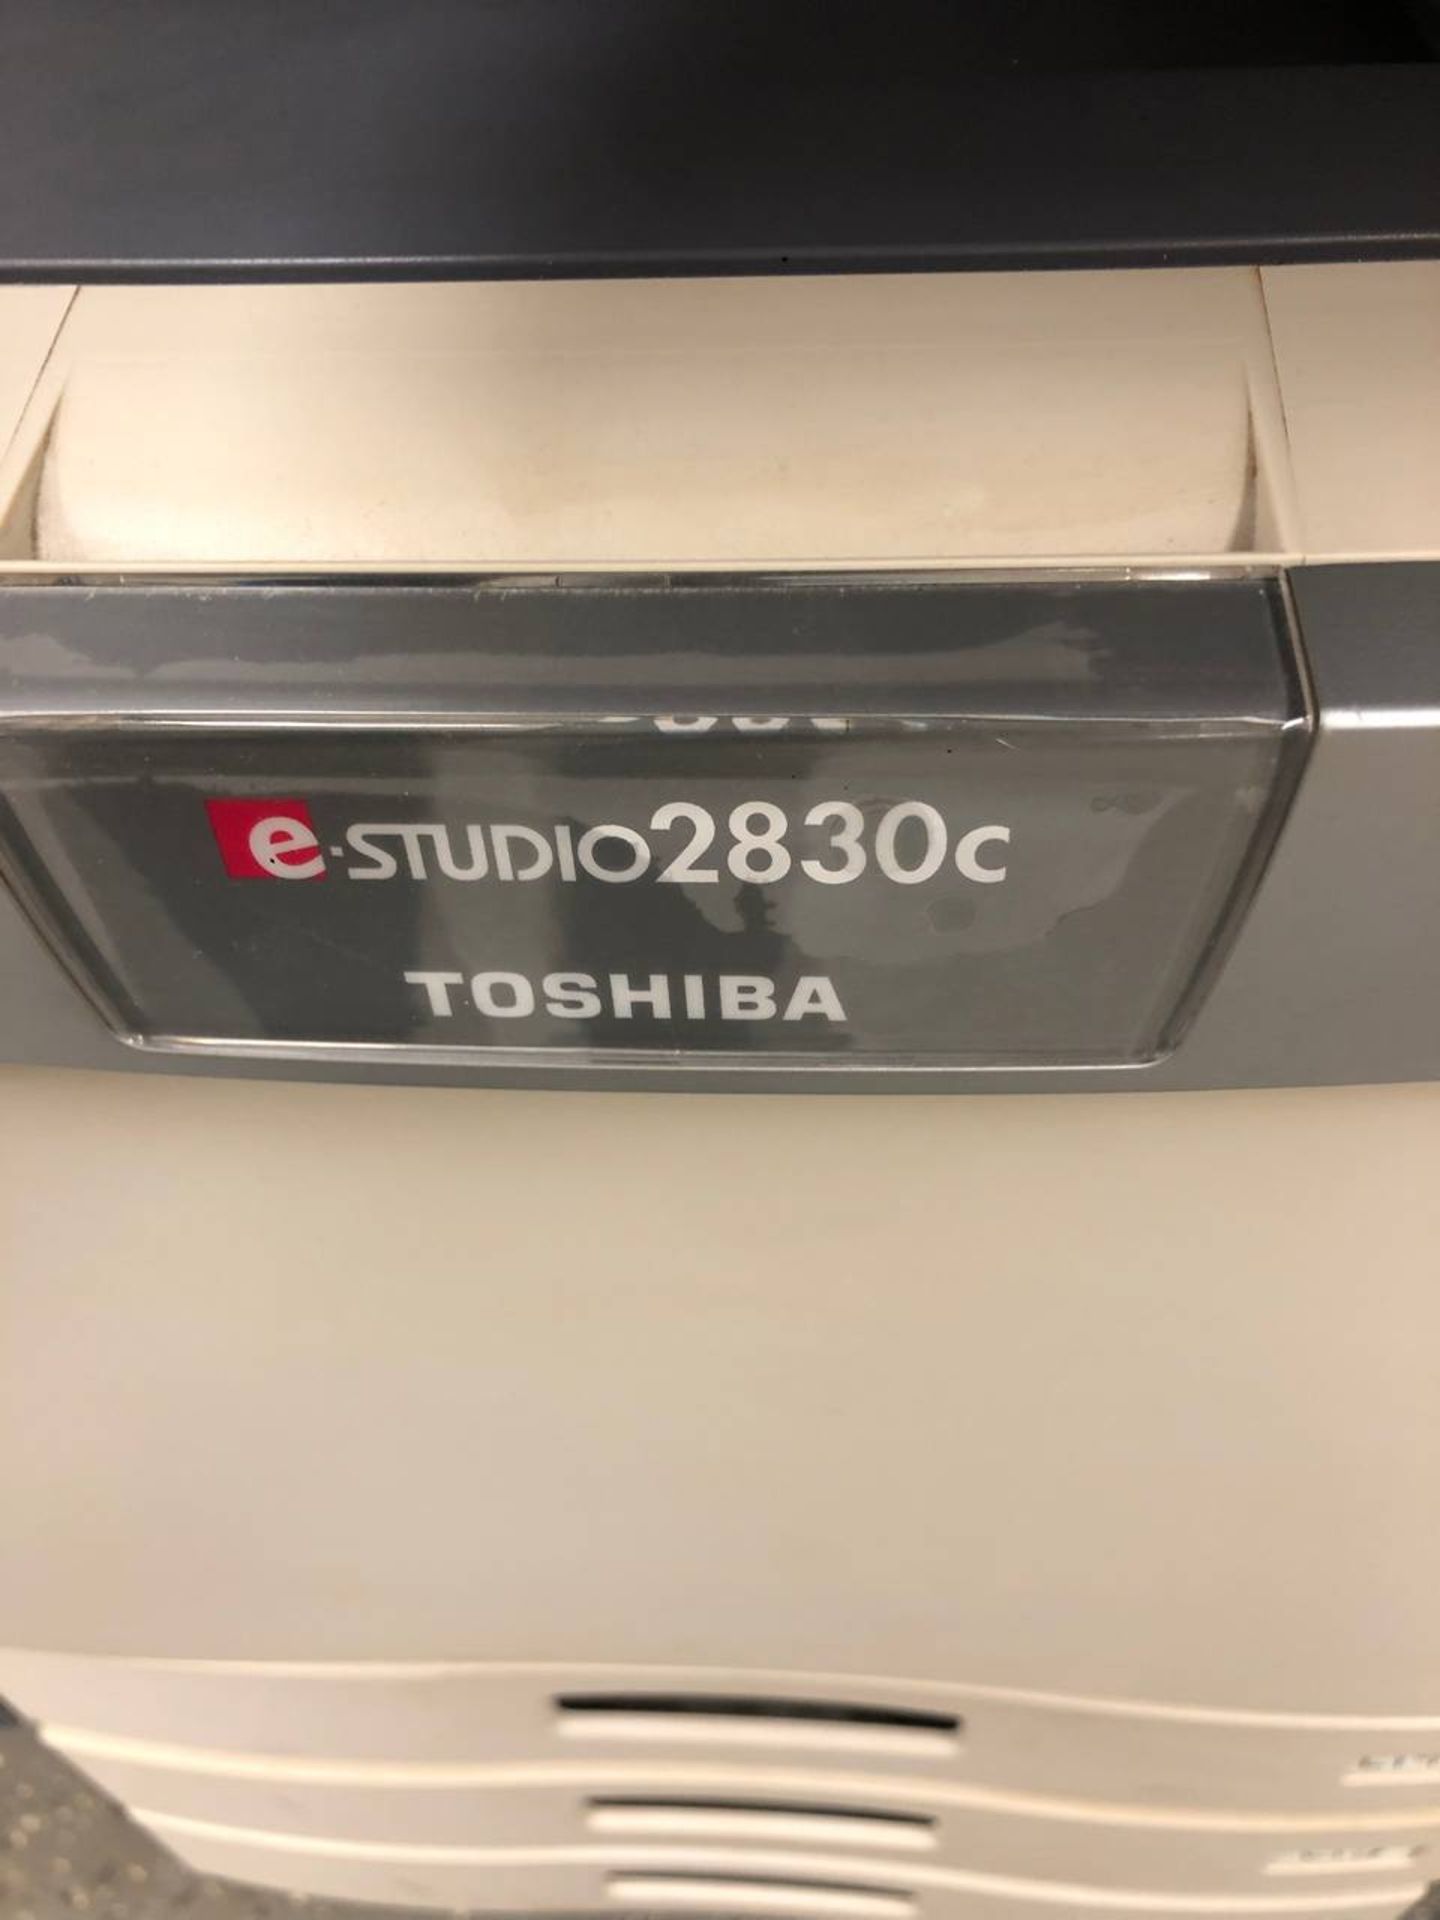 Toshiba Studio 2830C Printer - Image 2 of 3